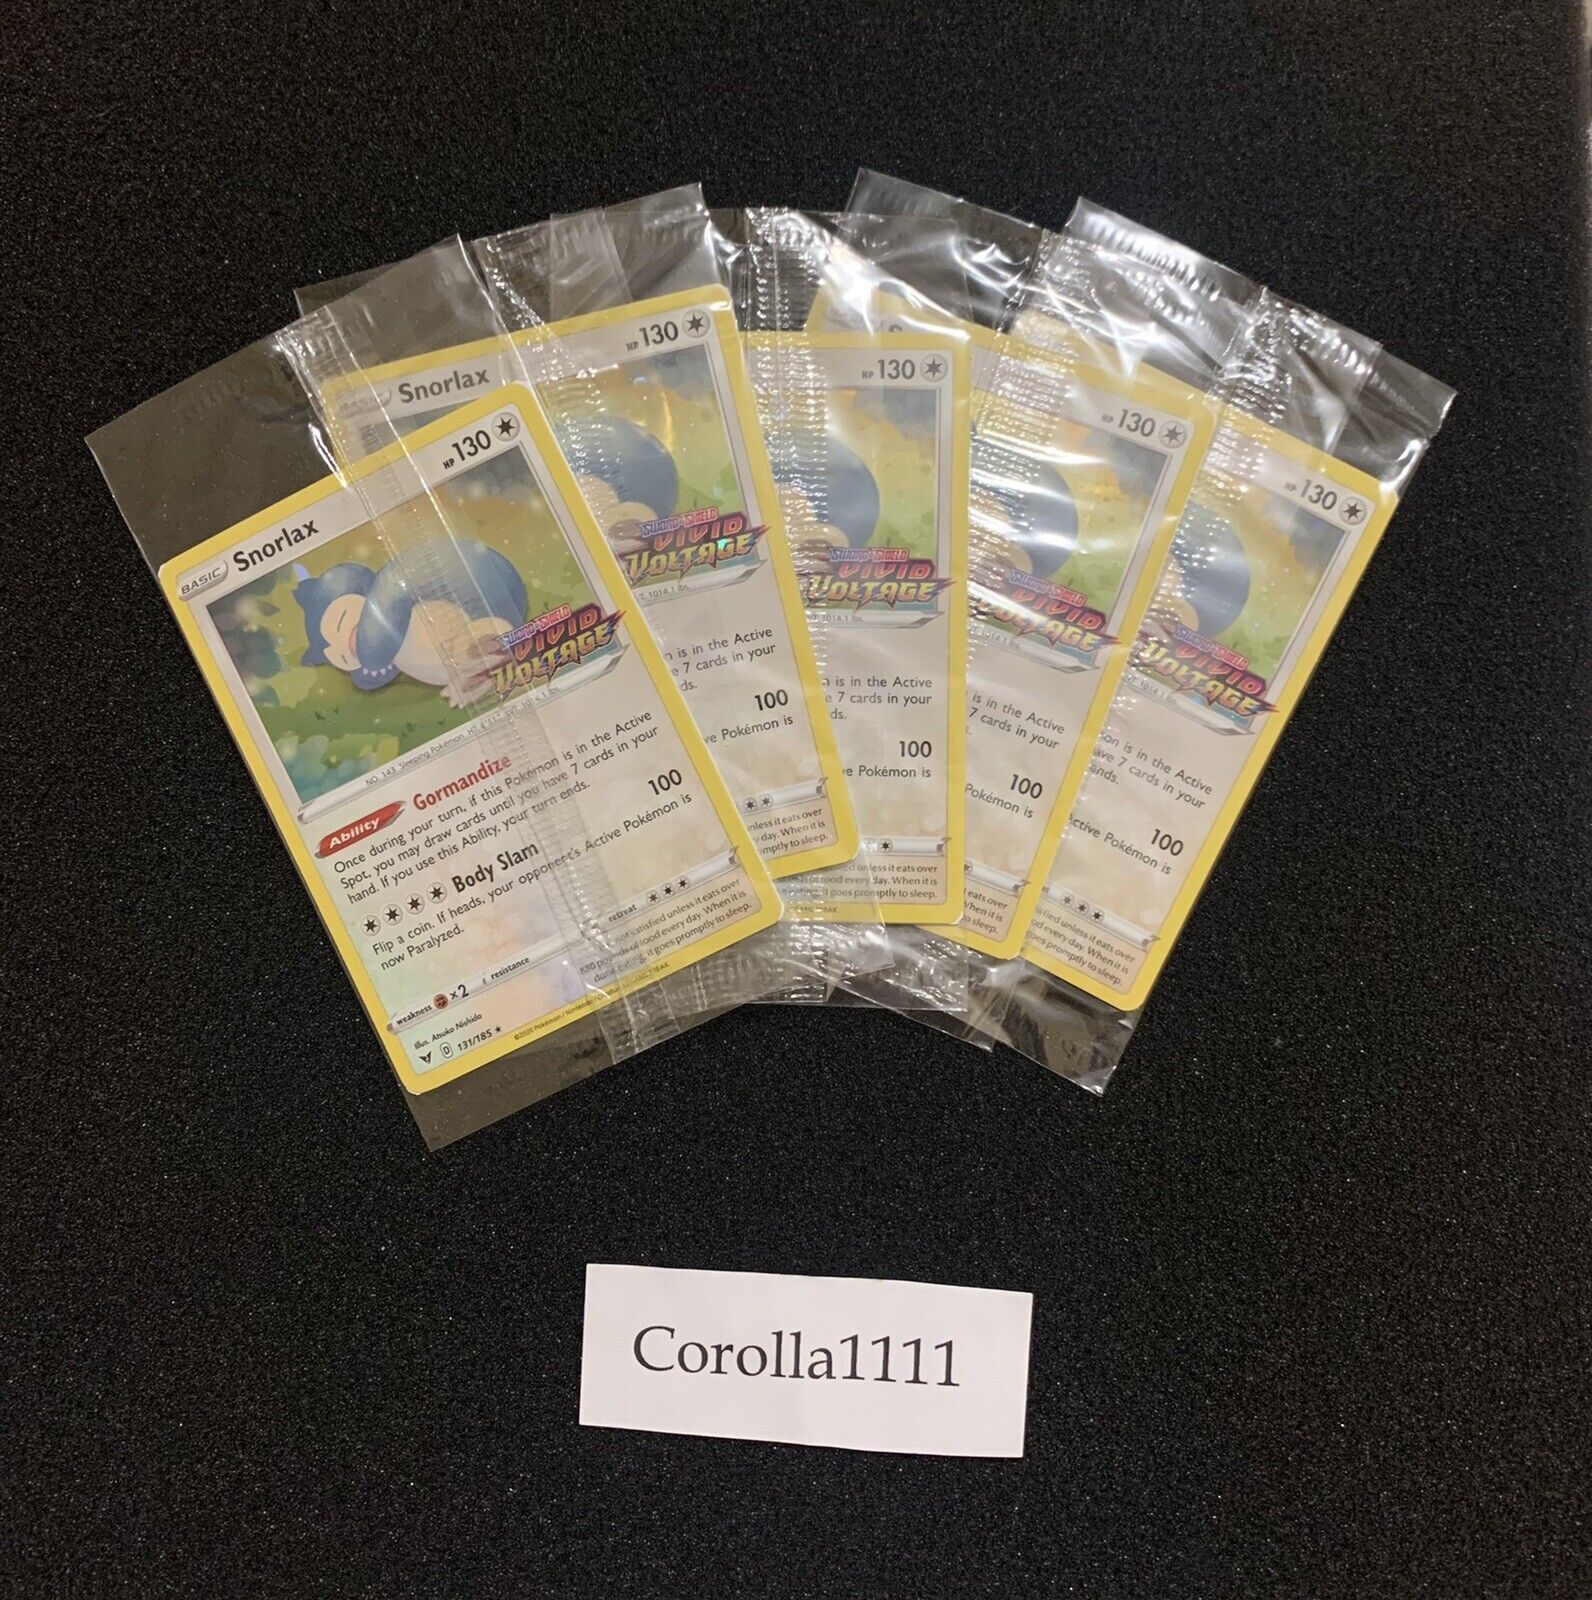 Snorlax 131/185 HOLO STAMPED Vivid Voltage Promo - SEALED - New Pokémon Card